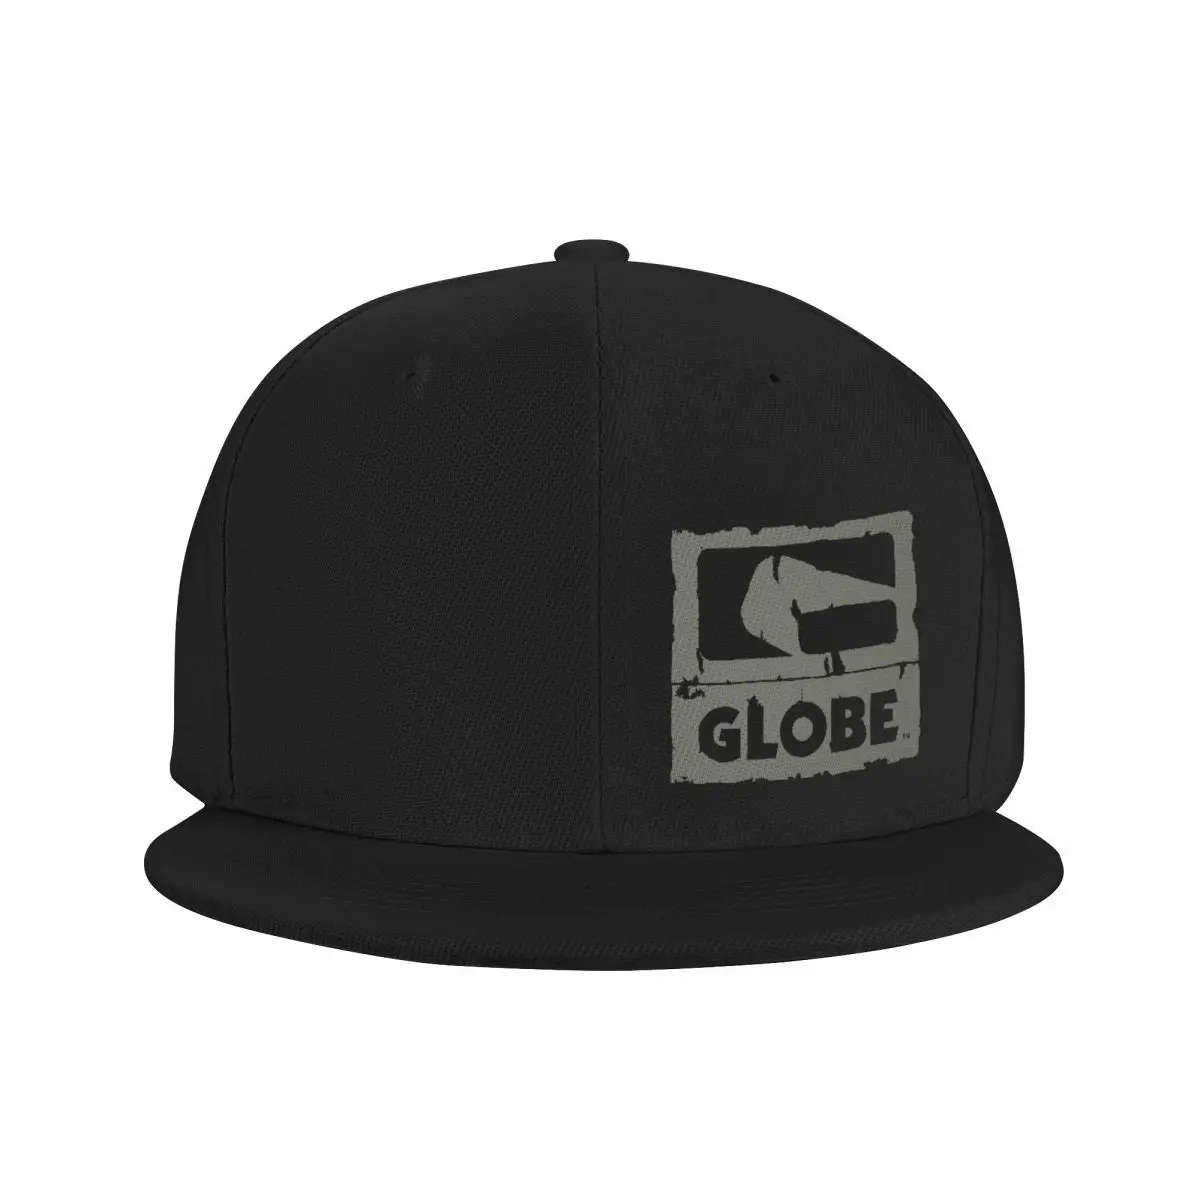 

Globe Skate Shoes Thrift Black Small hats adjustable Baseball caps Dad/Mom Couple Hat